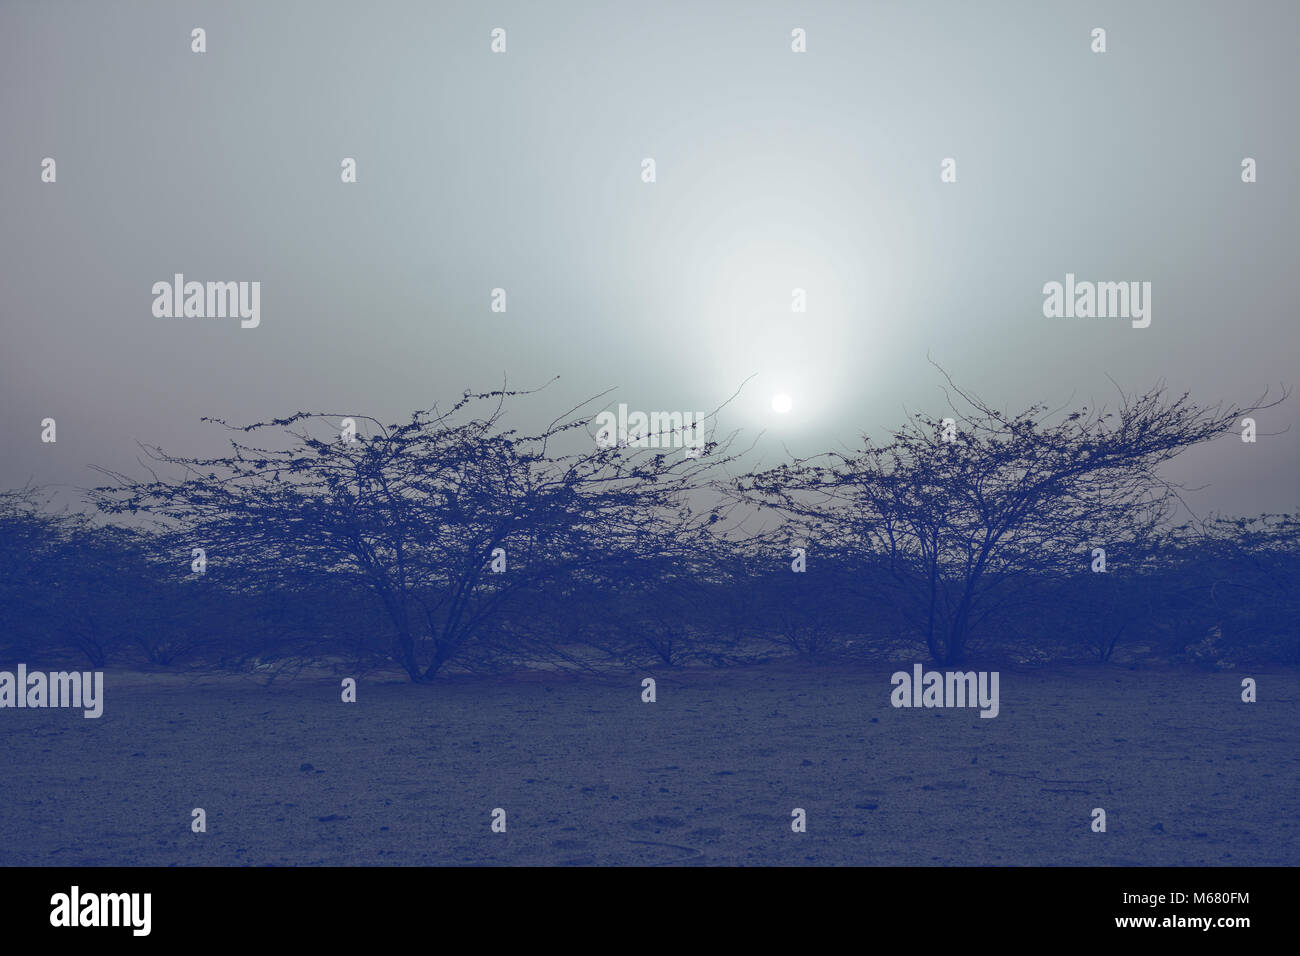 sunrises in desert with tree silhouette Stock Photo